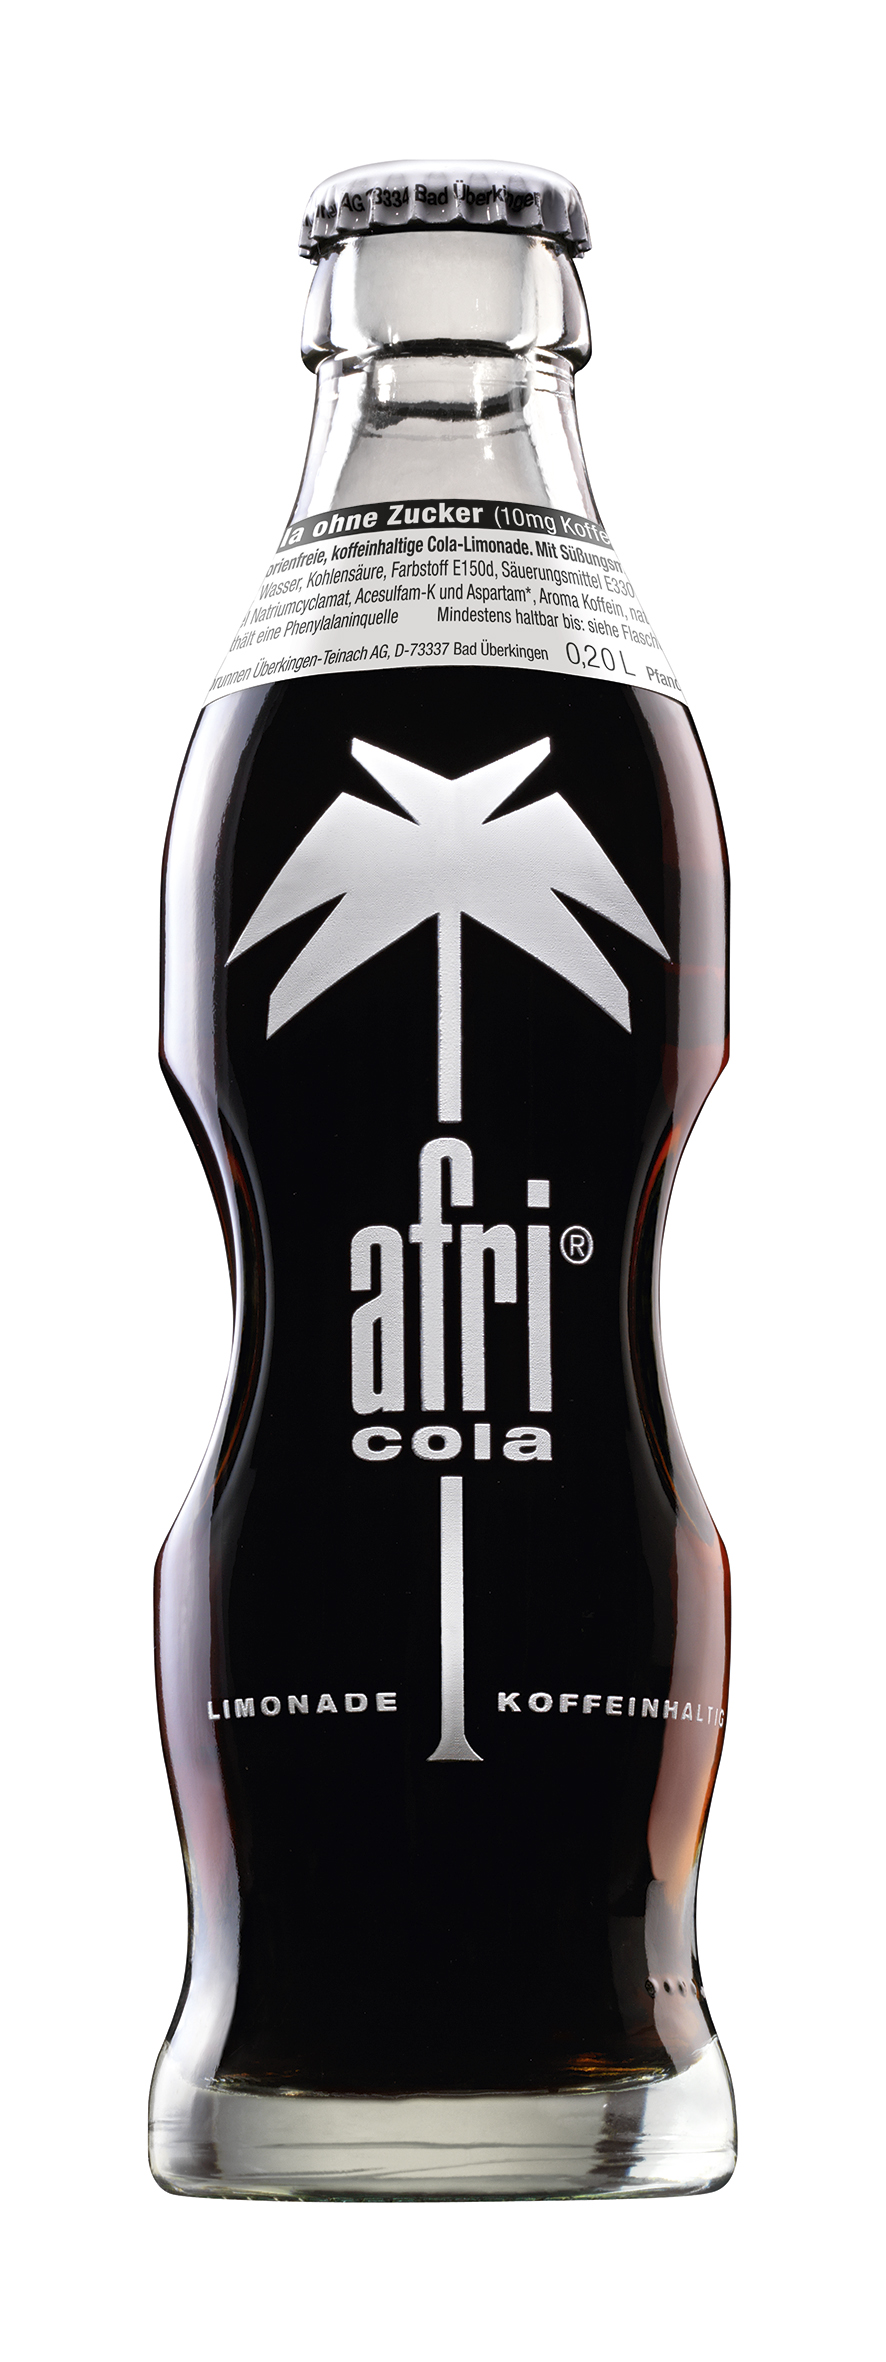 Afri Cola - - 0.33L